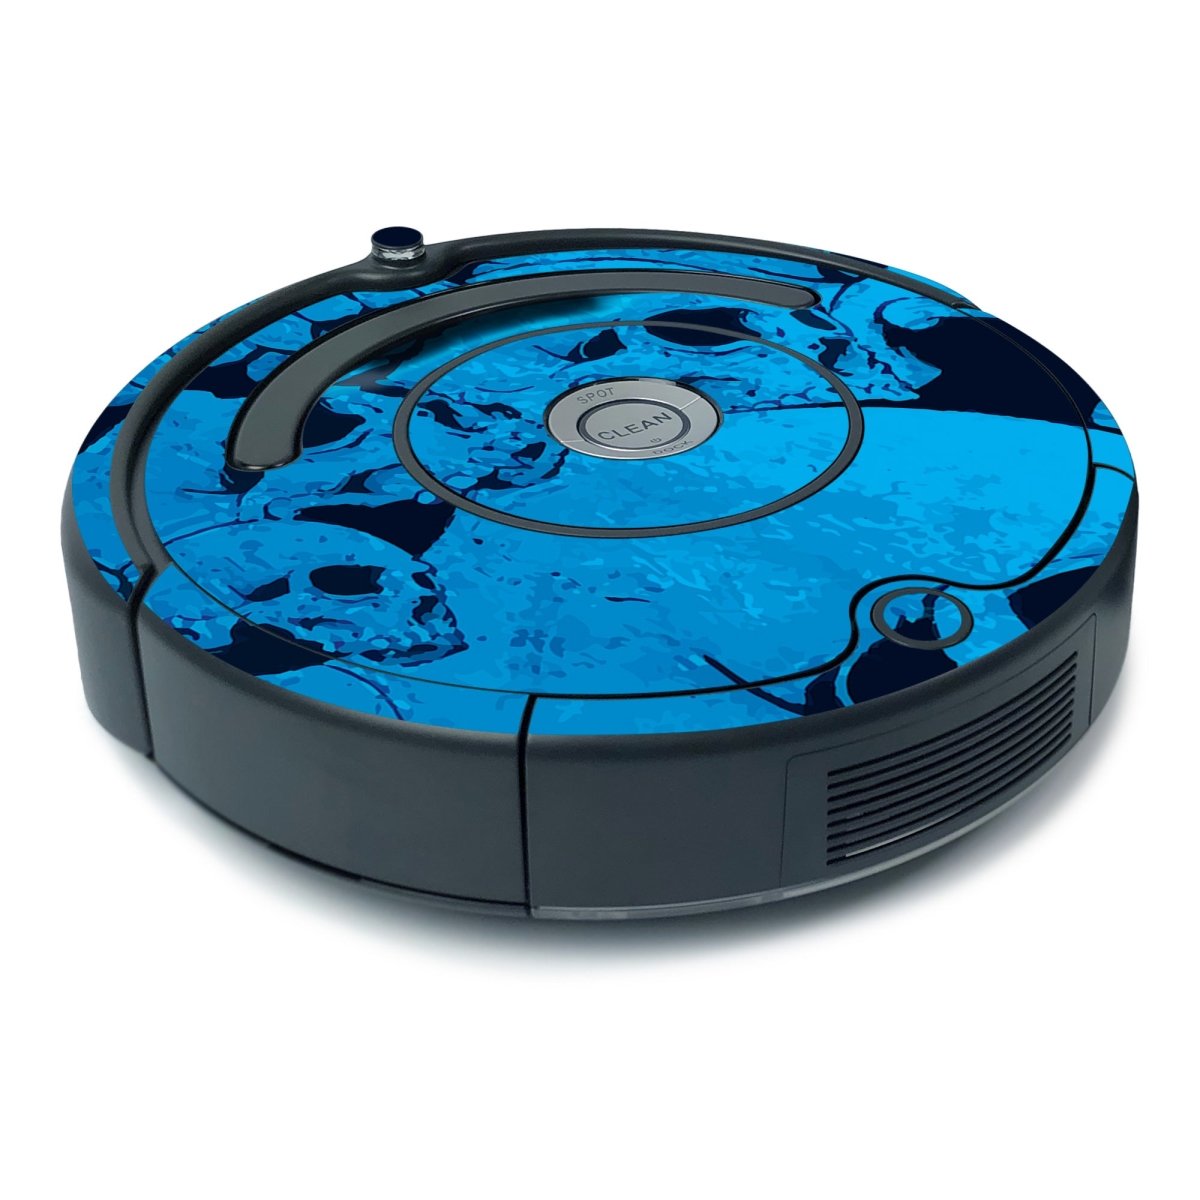 Picture of MightySkins IRRO675MIN-Blue Skulls Skin for iRobot Roomba 675 Minimal Coverage - Blue Skulls